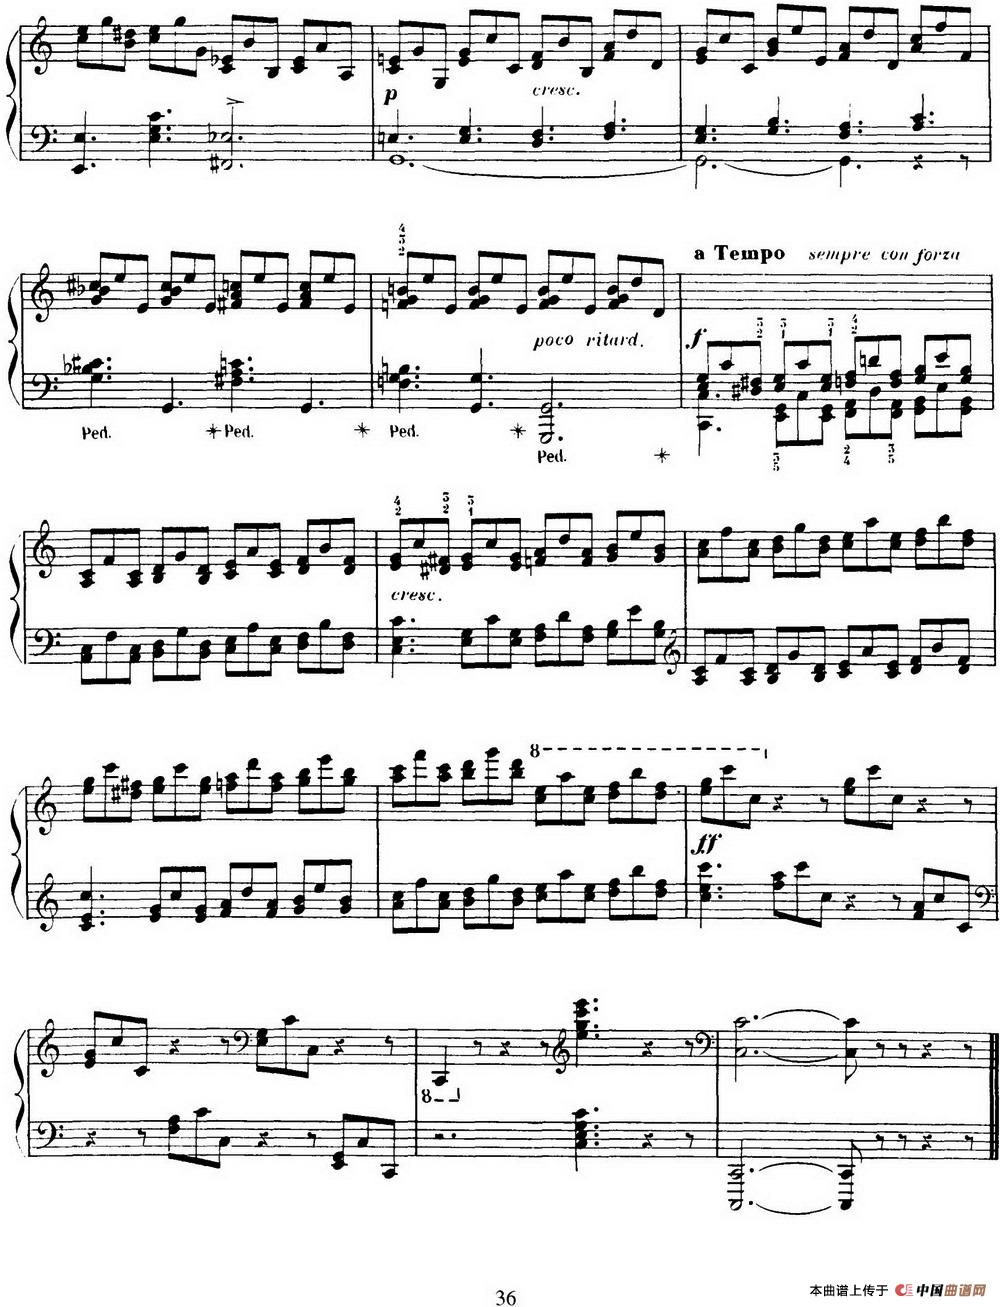 15 Etudes de Virtuosité Op.72 No.8（十五首钢琴练习曲之八）(1)_036=.jpg